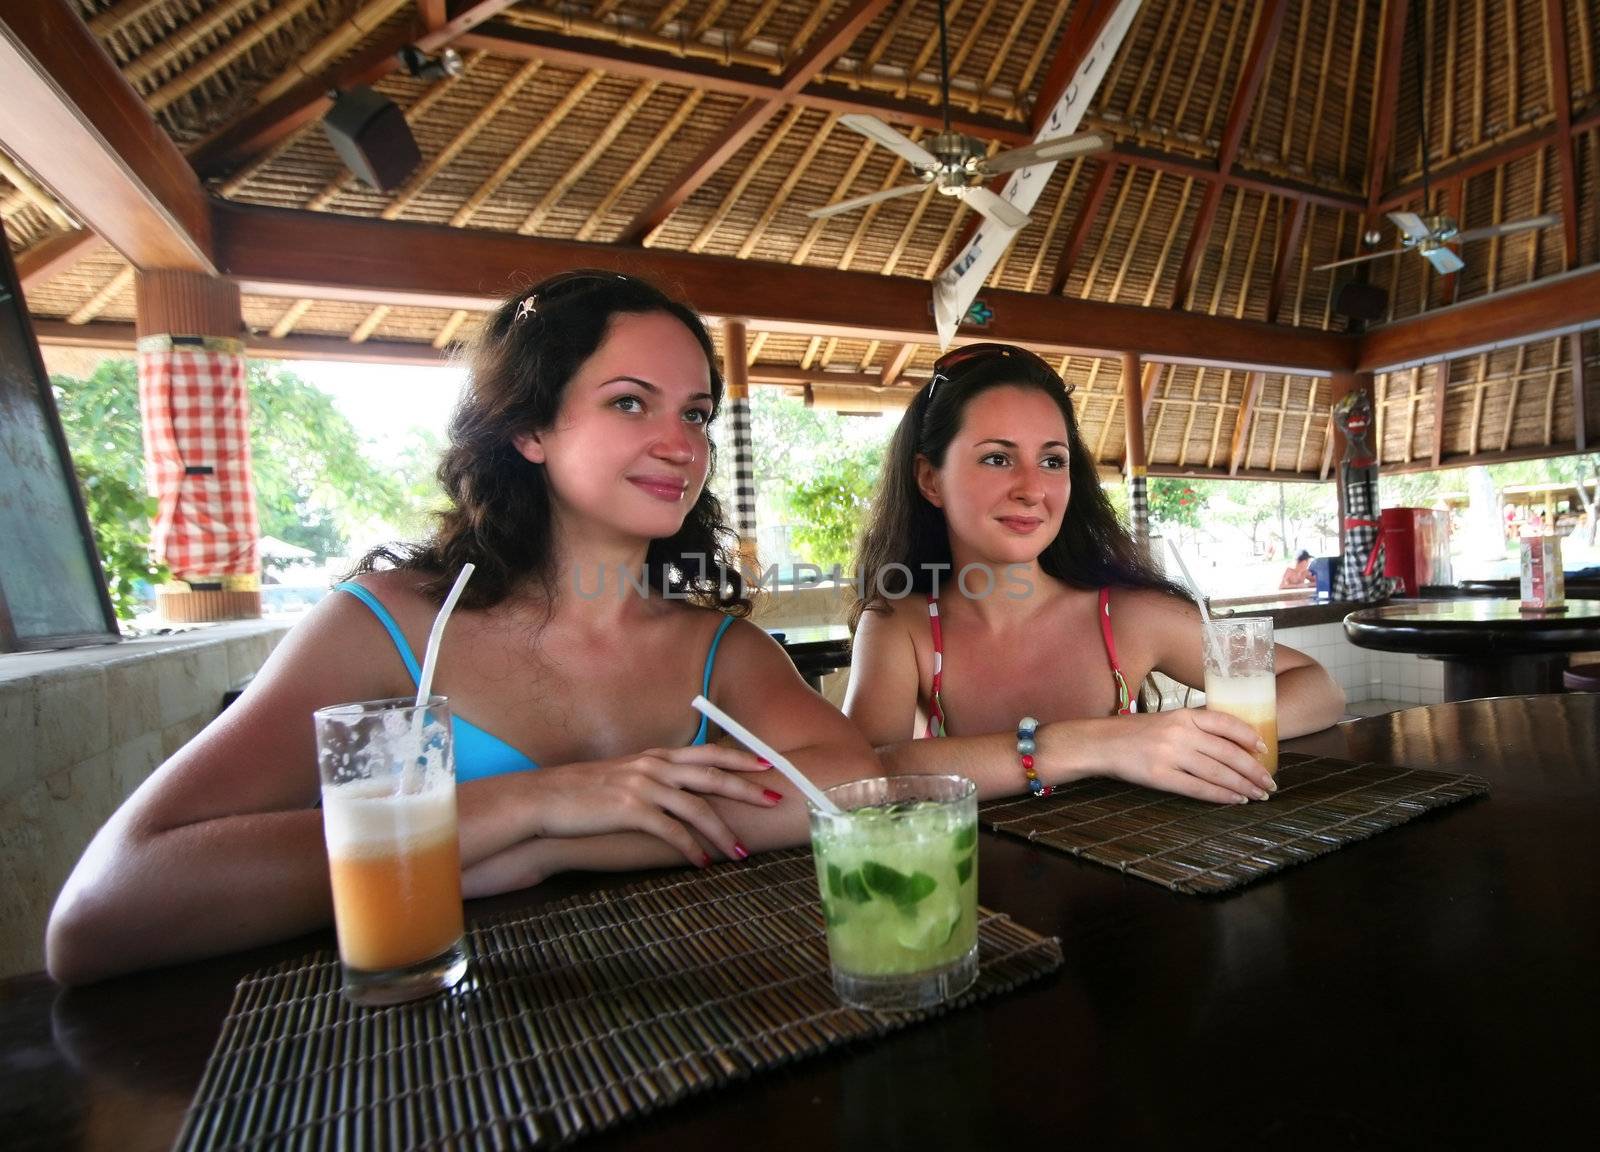 The beautiful young women, enjoying a cocktail in a bar